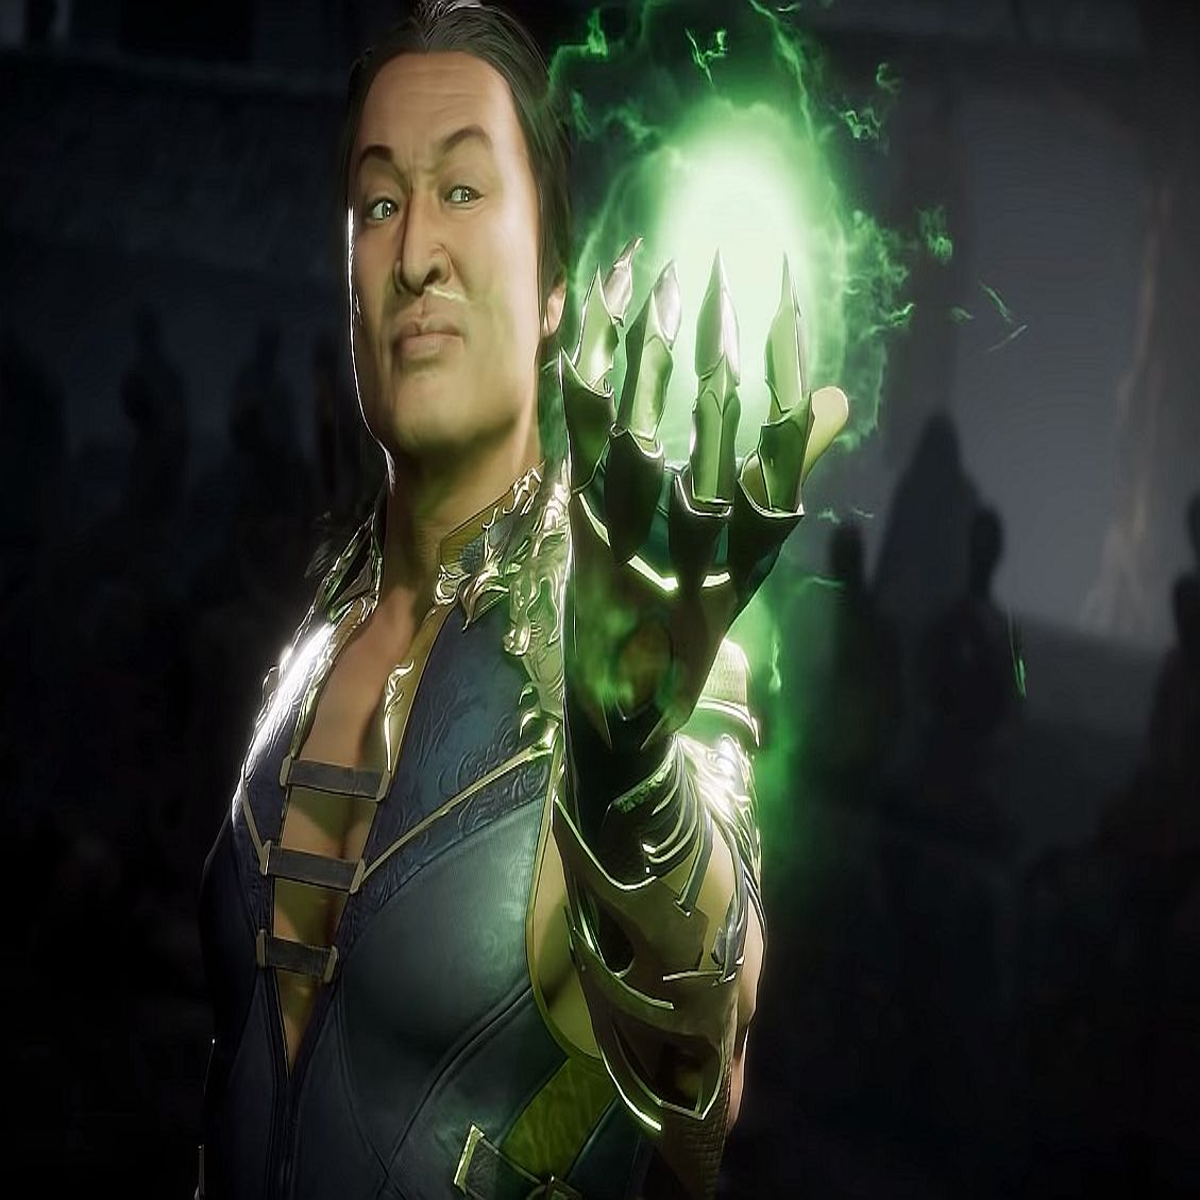 Mortal Kombat Kollection Leak Reveals Online Re-Release for the Originals